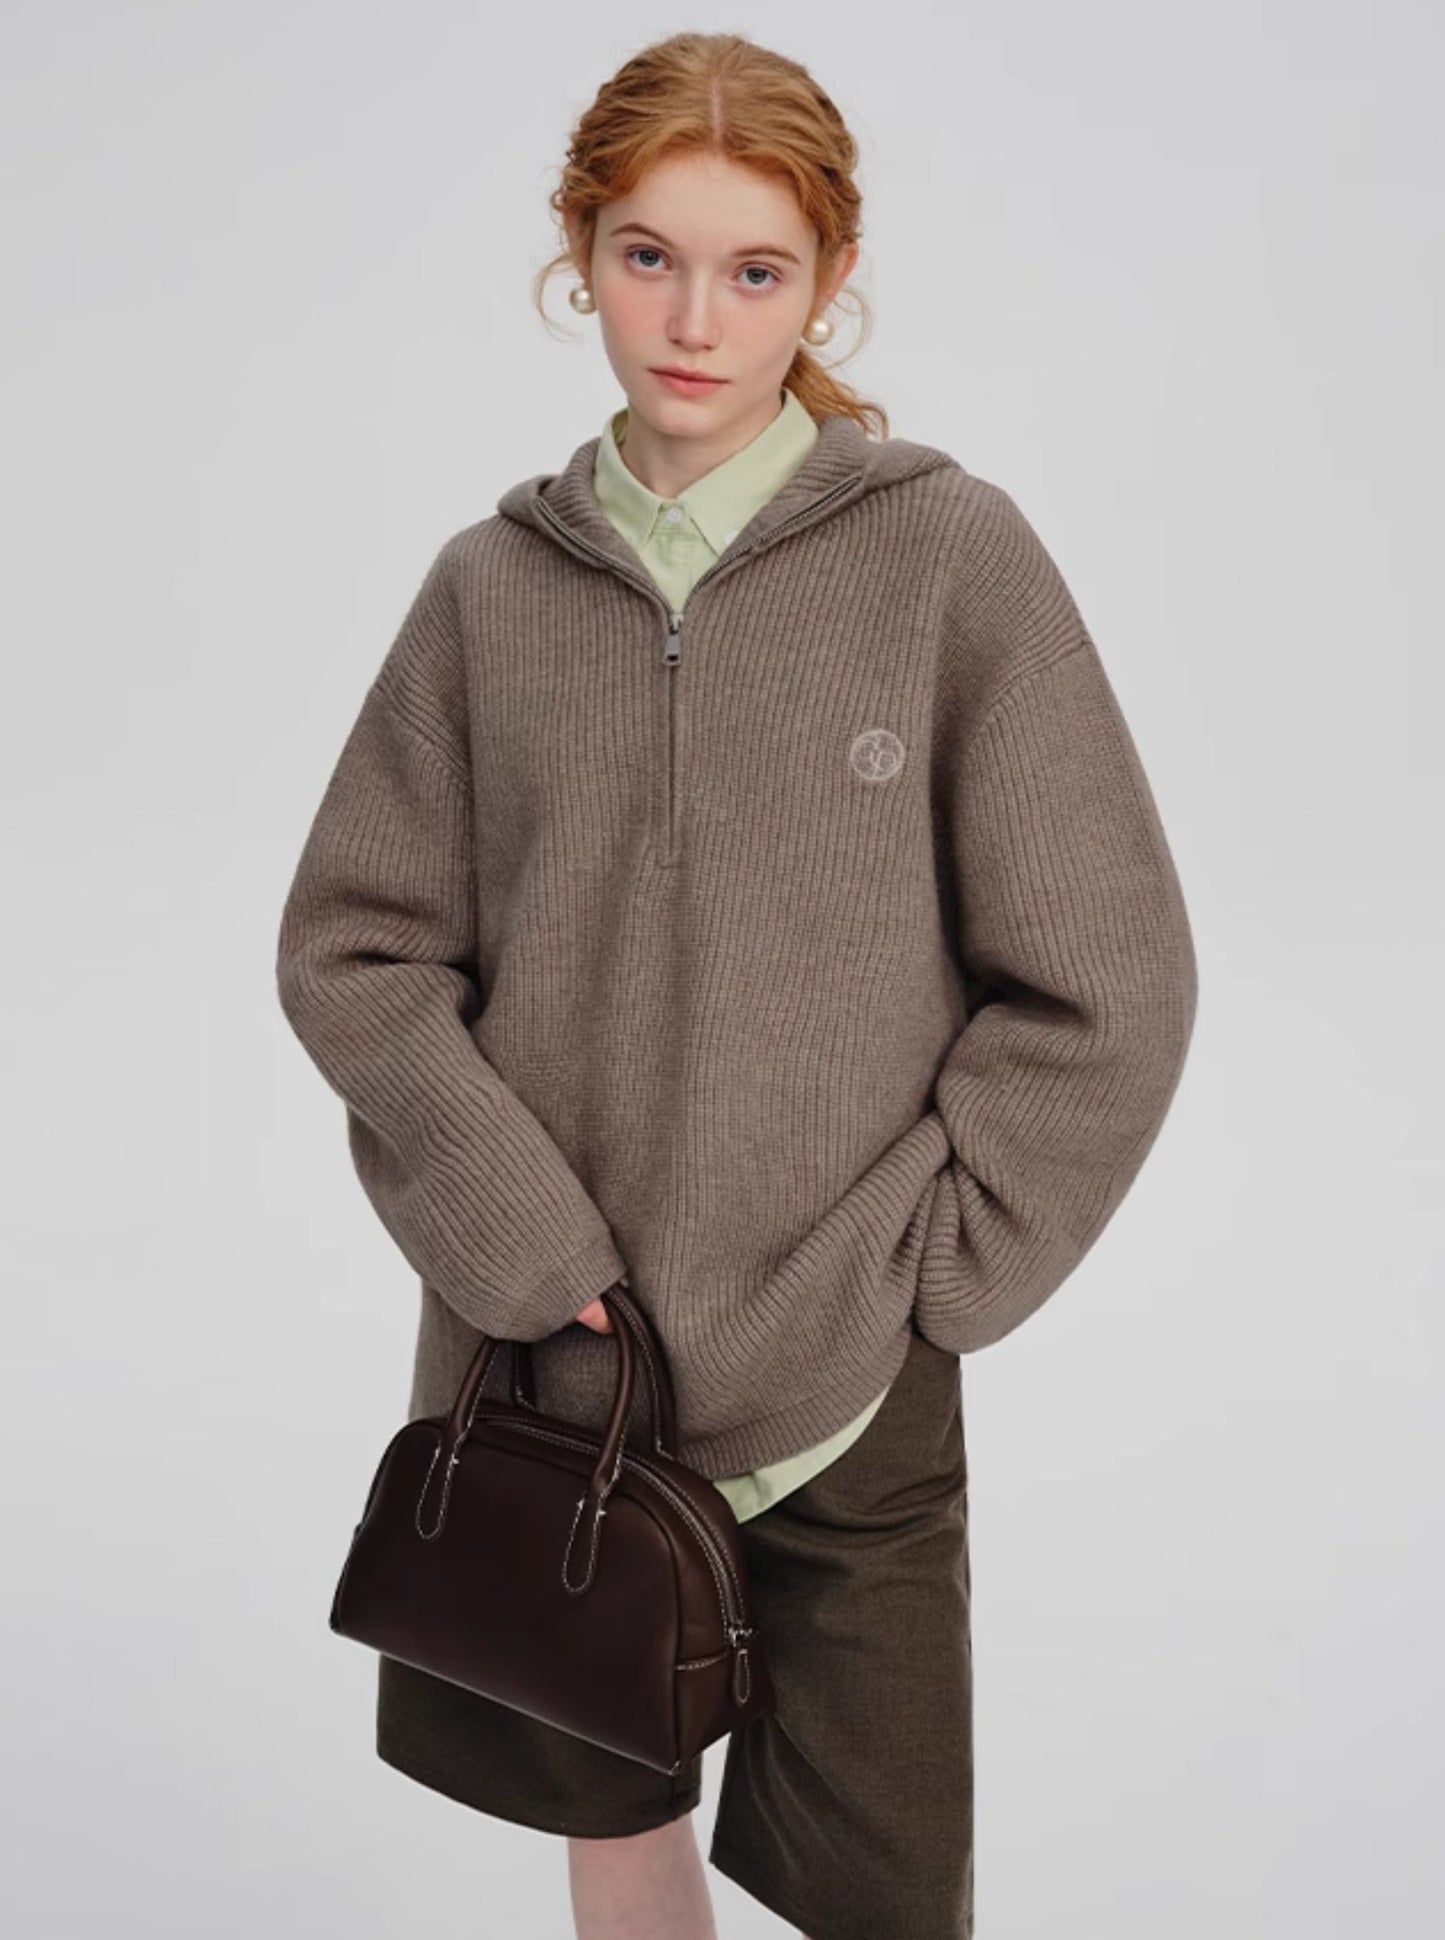 Maillard hooded half-zipper sweater